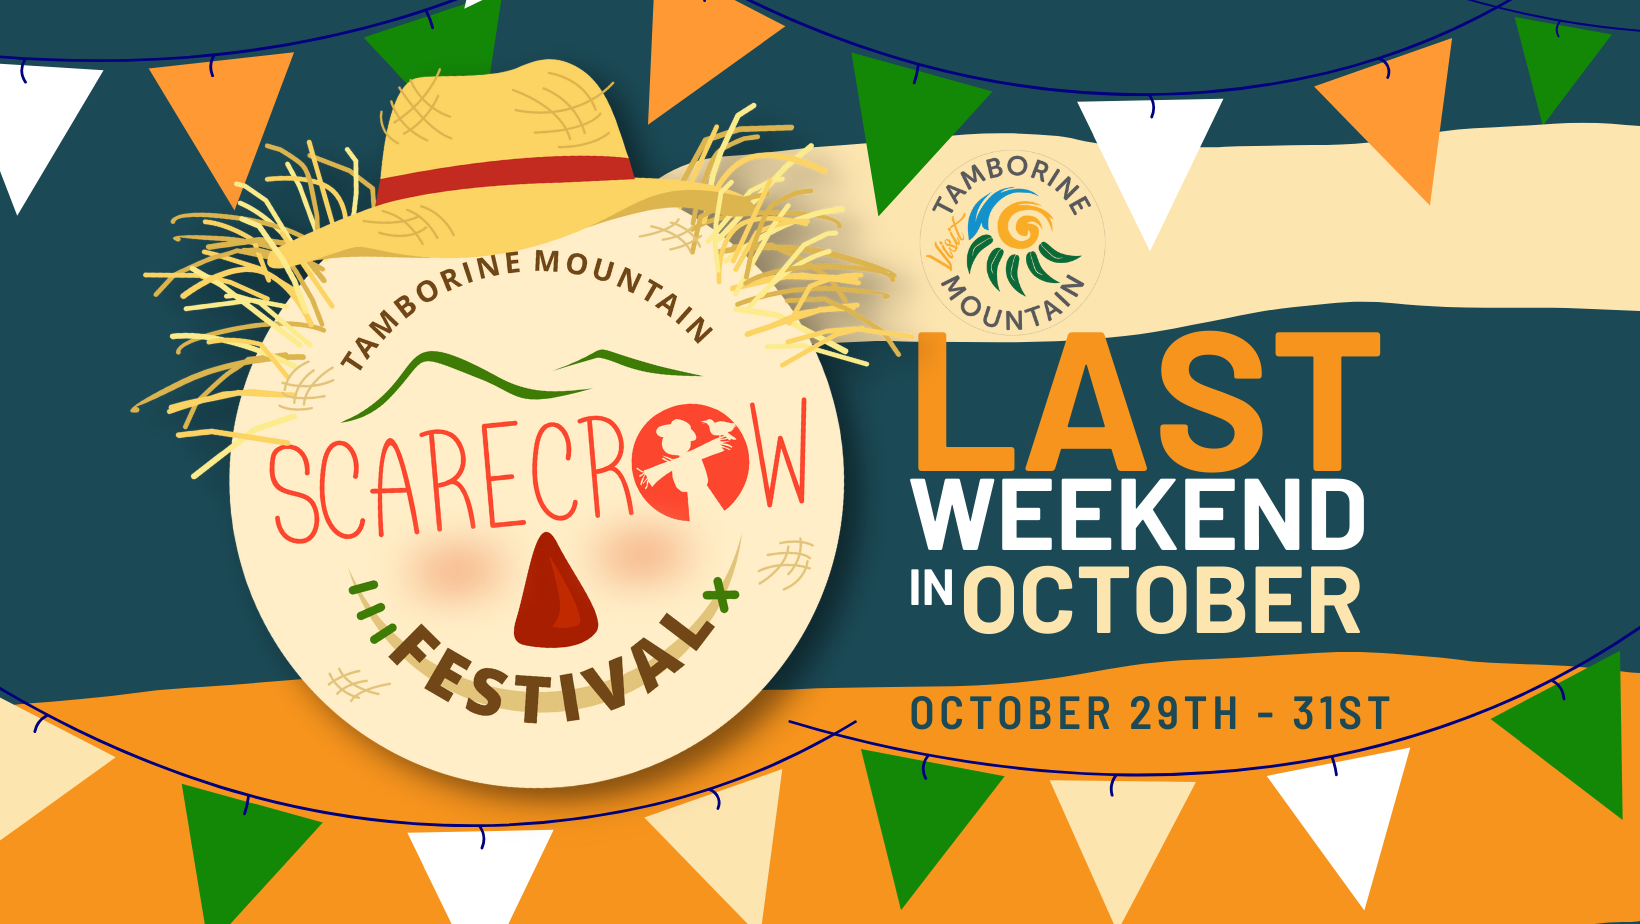 Annual Tamborine Mountain Scarecrow Festival